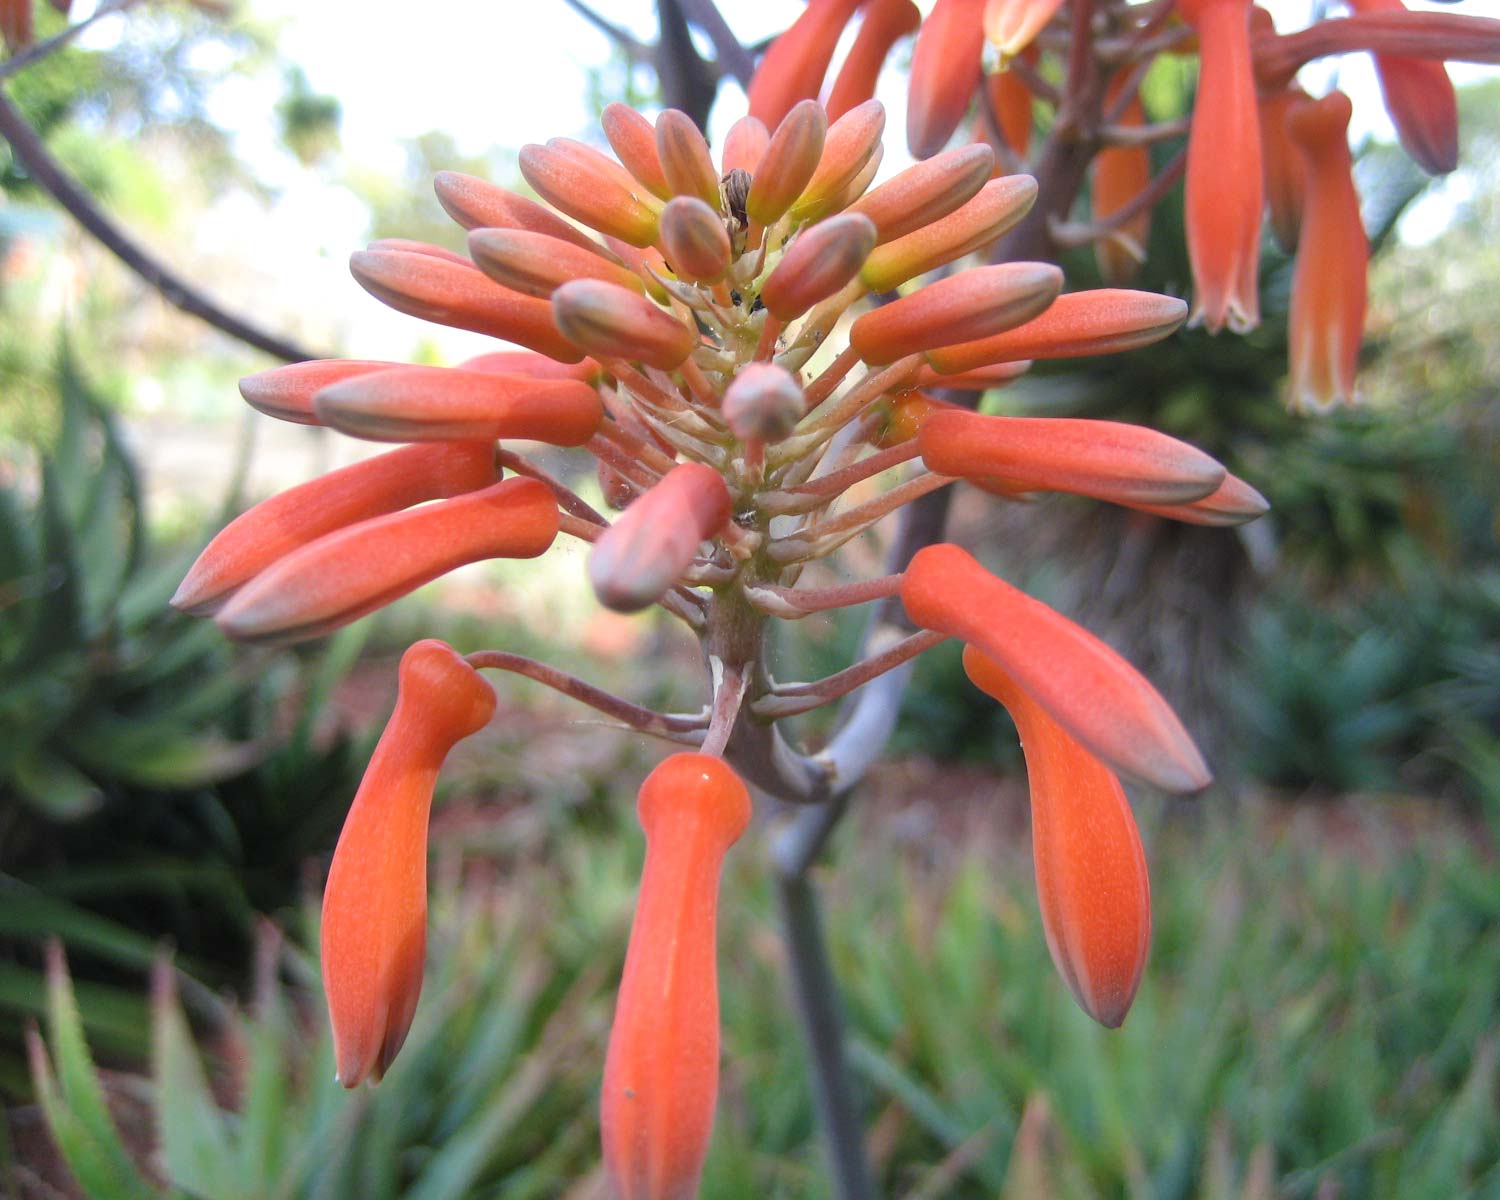 Aloe striata or Coral Aloe has pendulous coral-red flowers